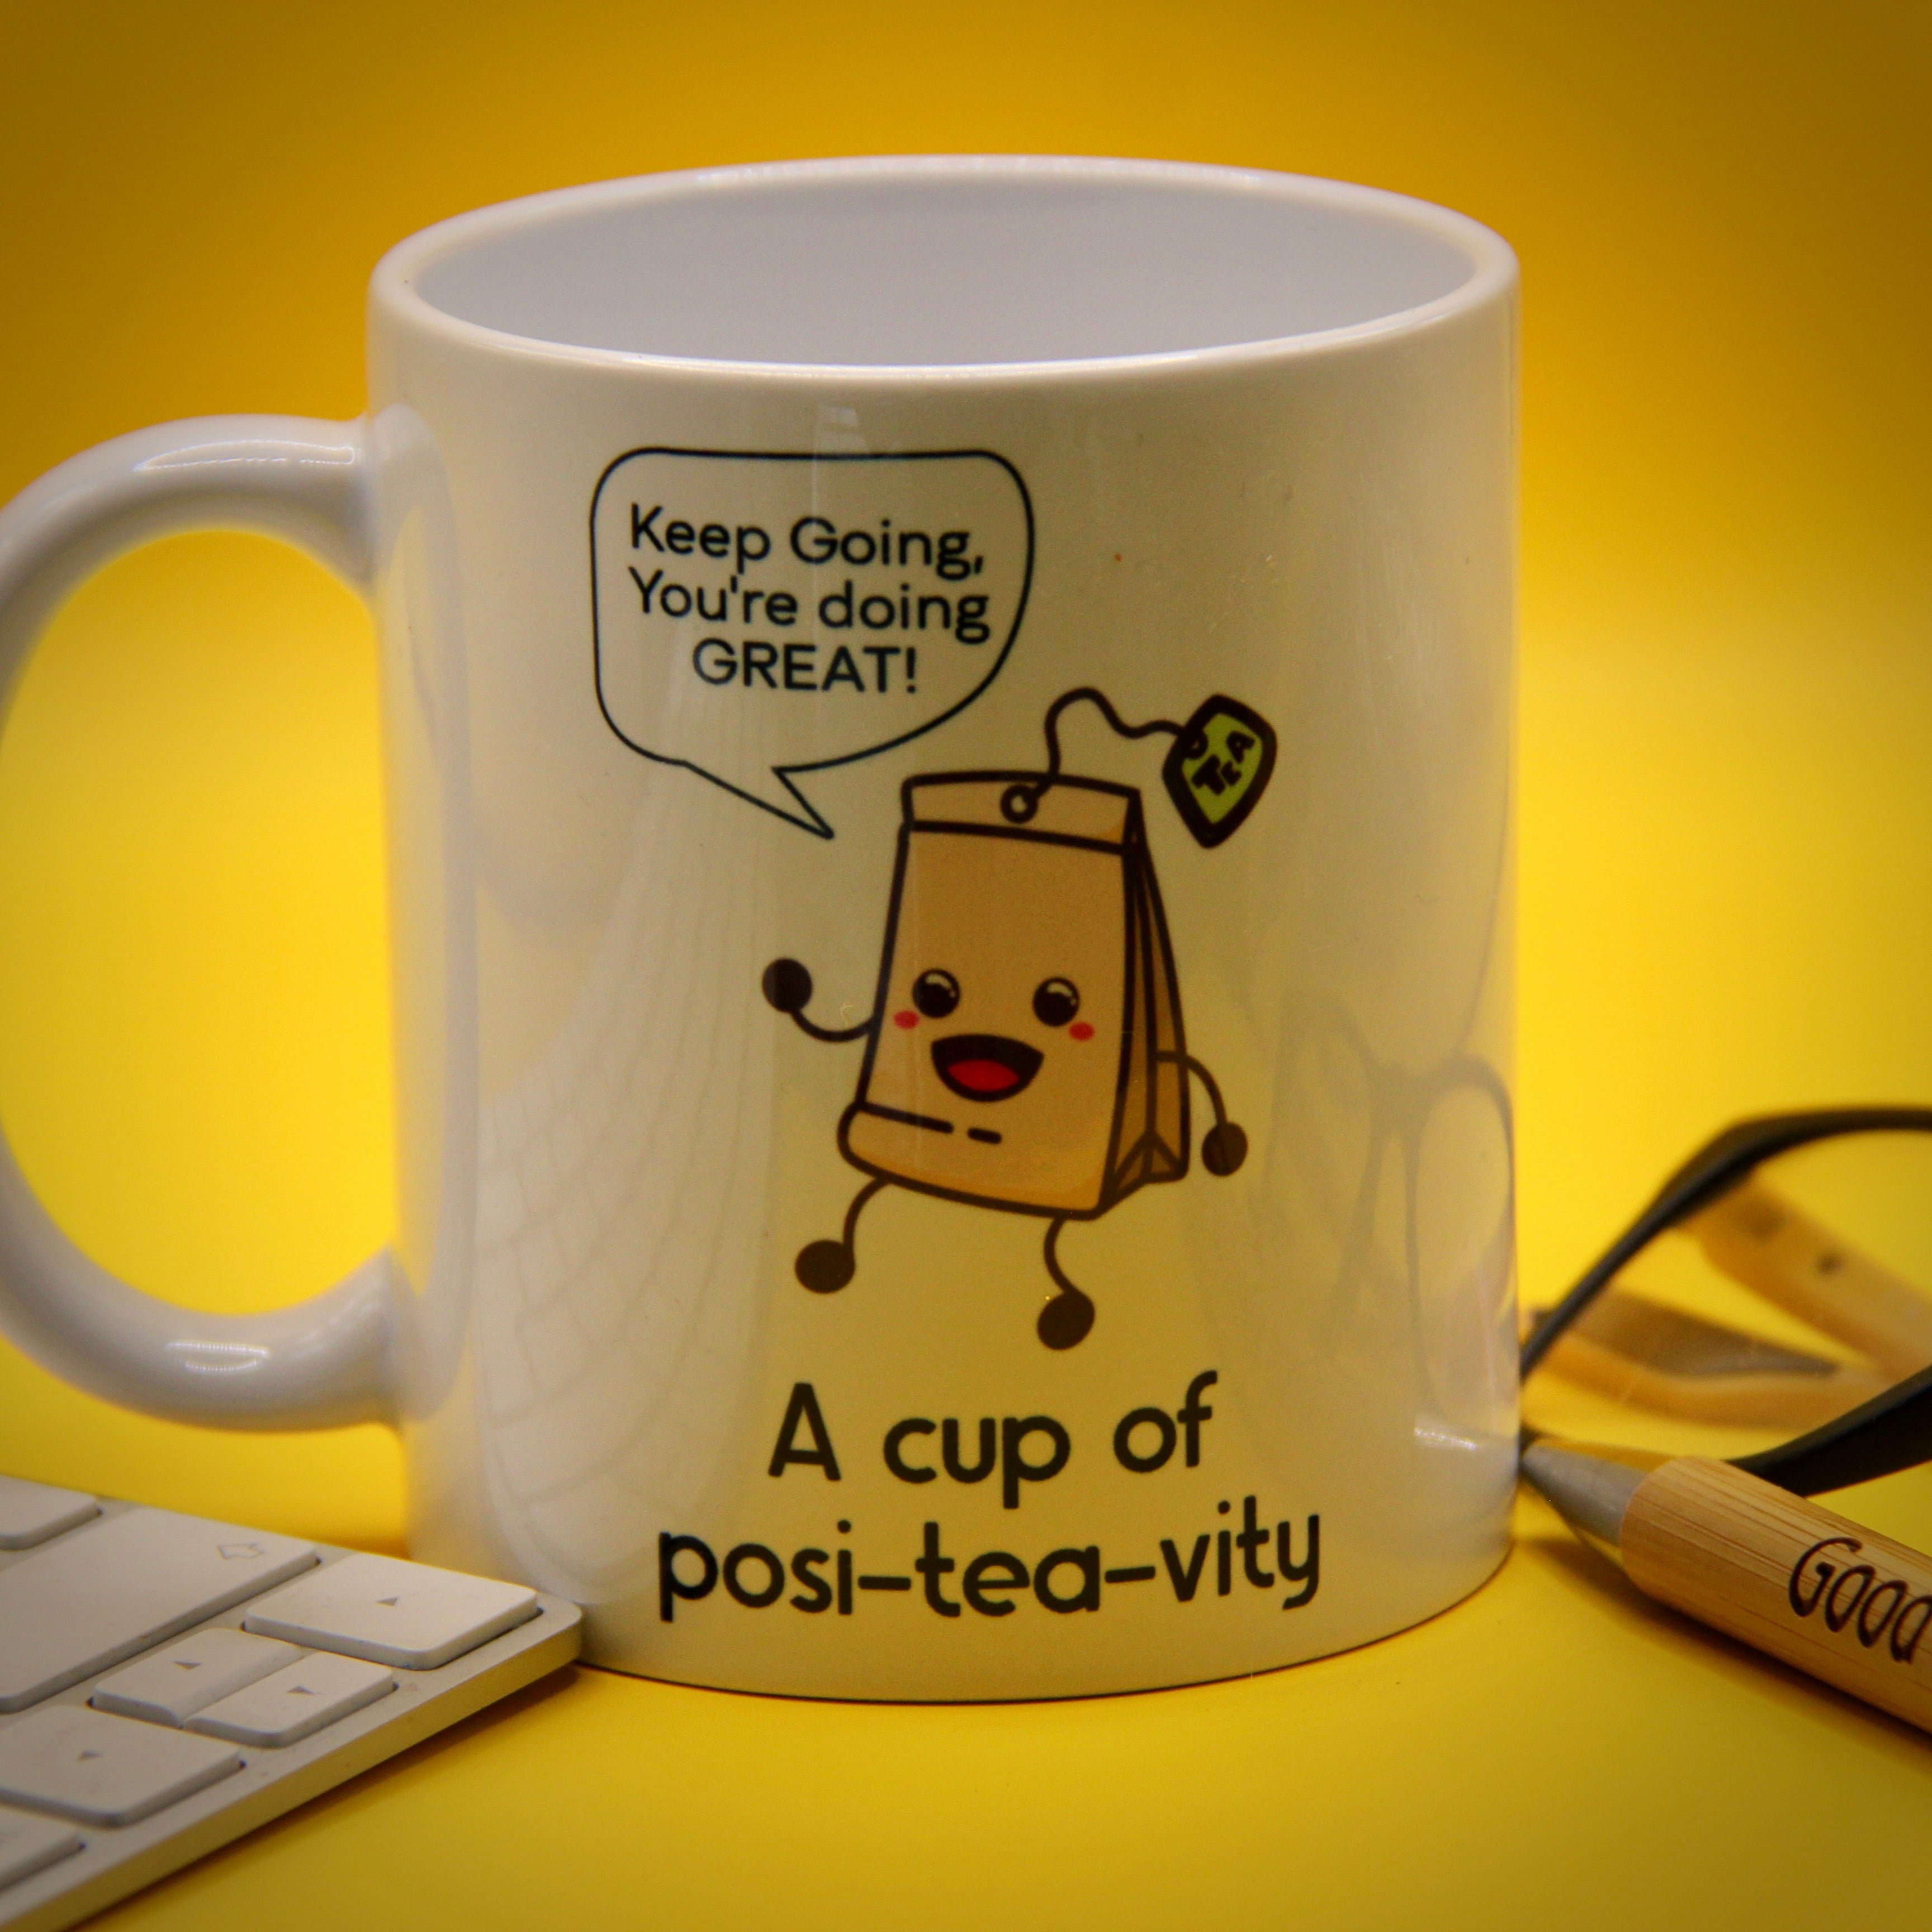 Cup of positeavity funny get well mug